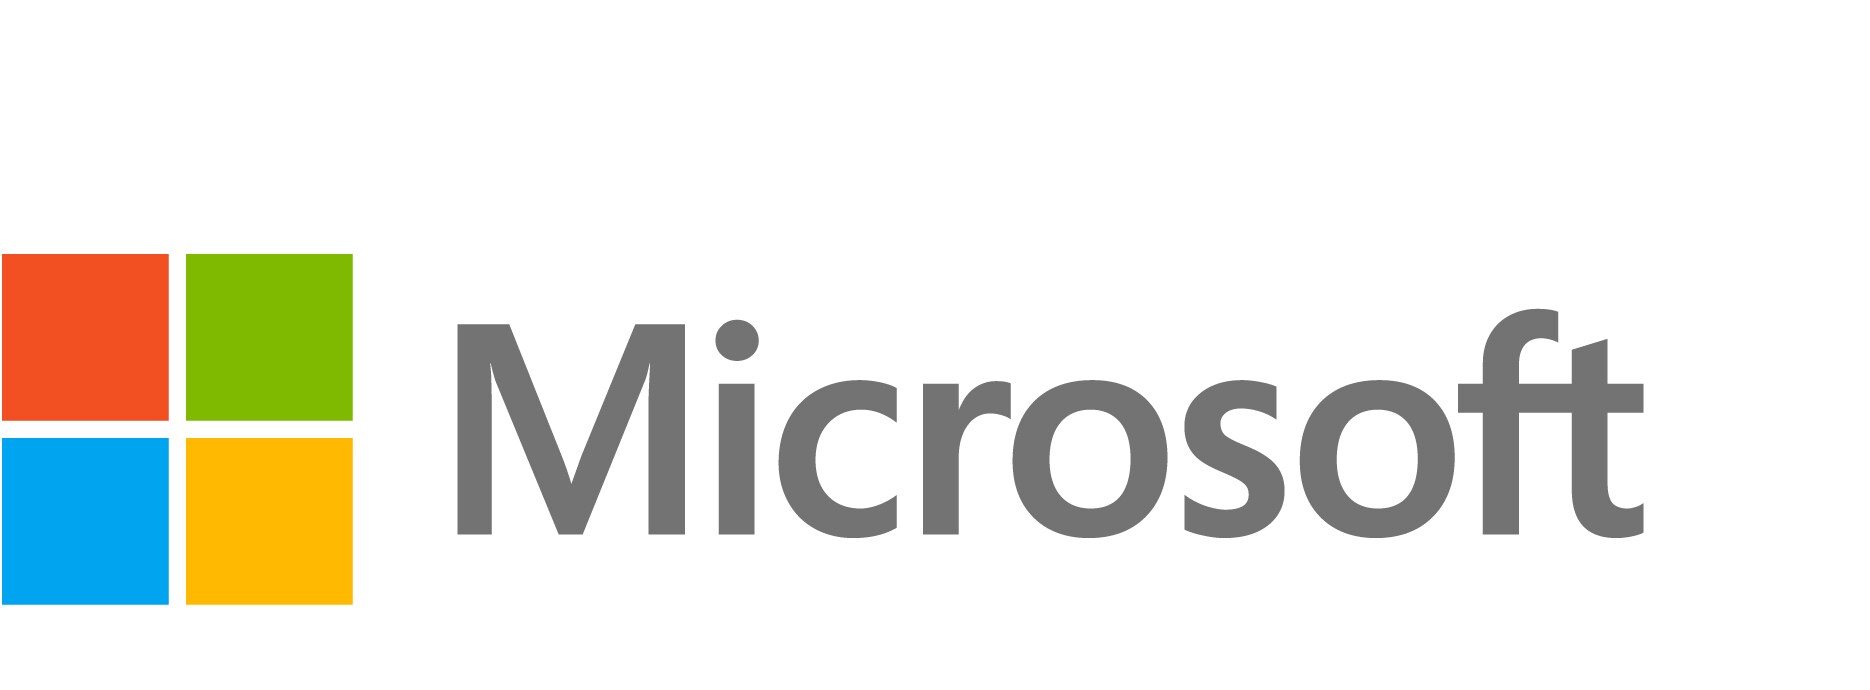 Windows 10/11 Enterprise E3 - subscription license (1 year) - 1 license